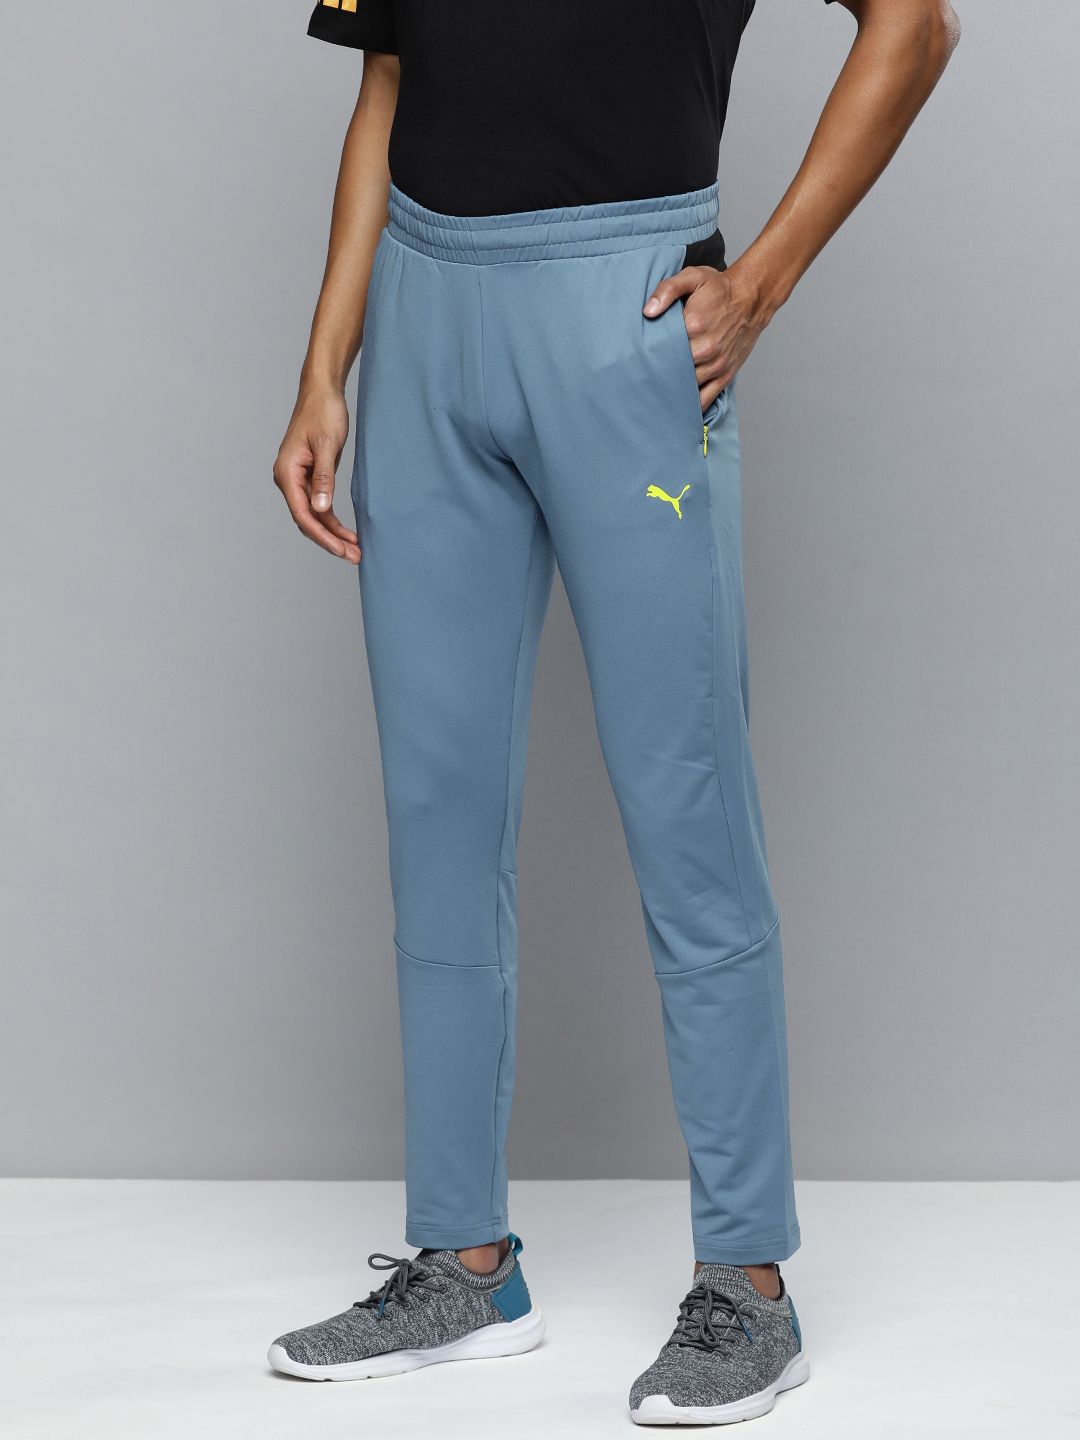 Puma Sweatpants & Joggers : Buy Puma One8 Virat Kohli Active Men Black Pants  Online | Nykaa Fashion